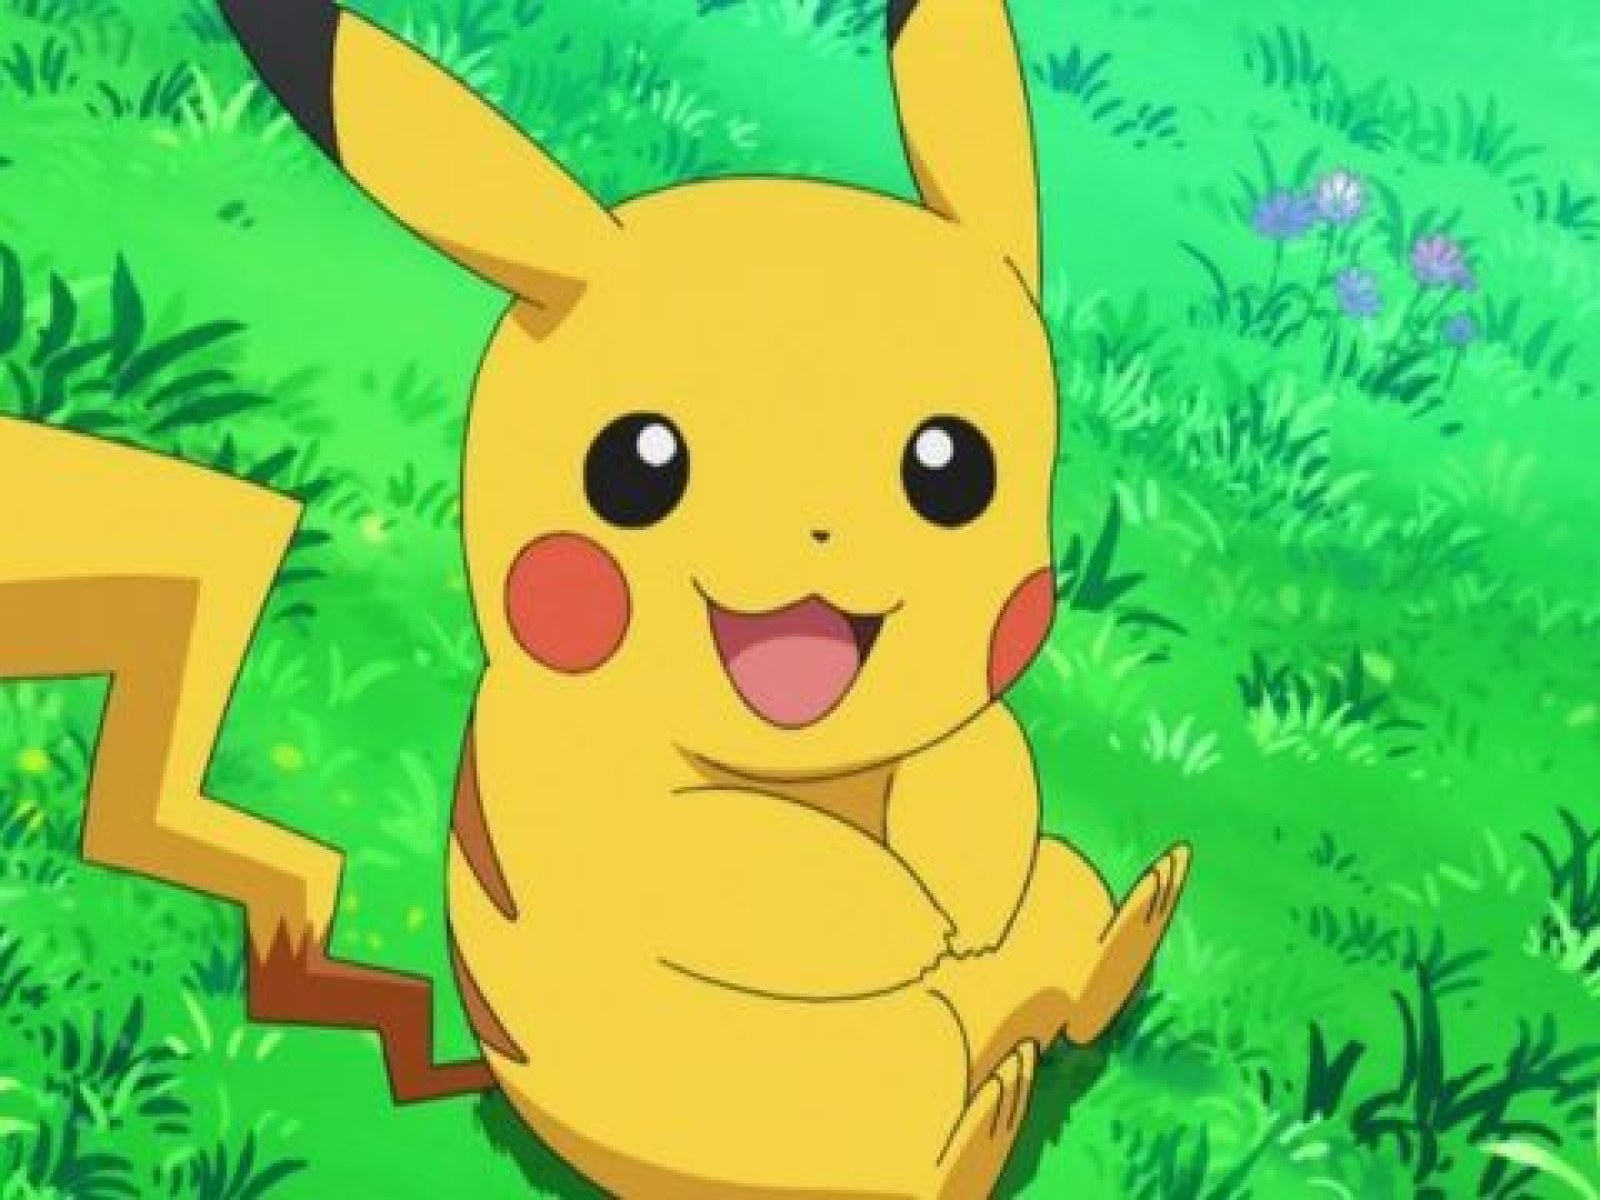 Pikachu Talk App How To Speak With Pokemon On Google Home Or Alexa